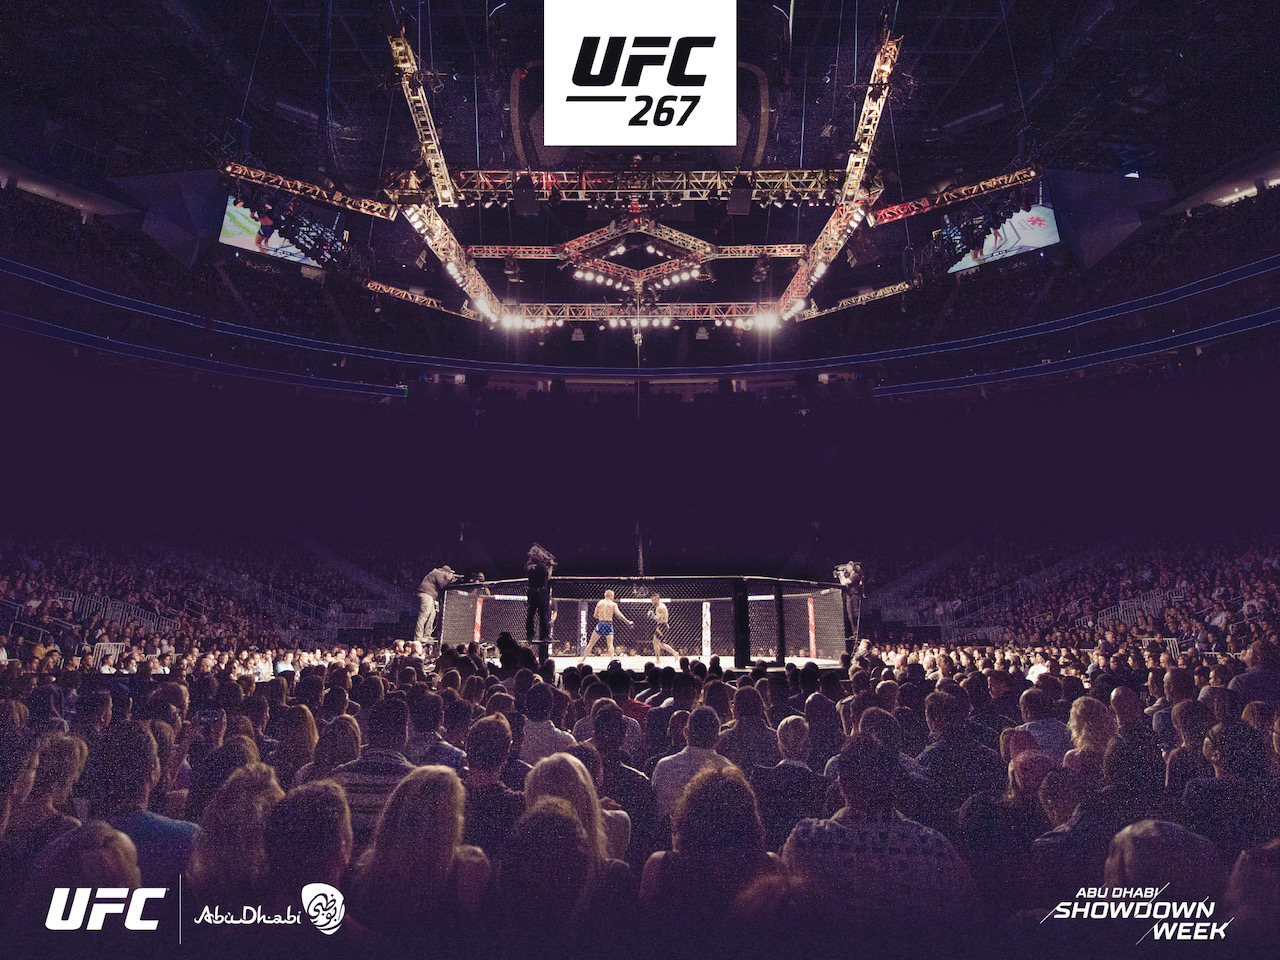 Mega Fights Return To Abu Dhabi With UFC 267 On October 30